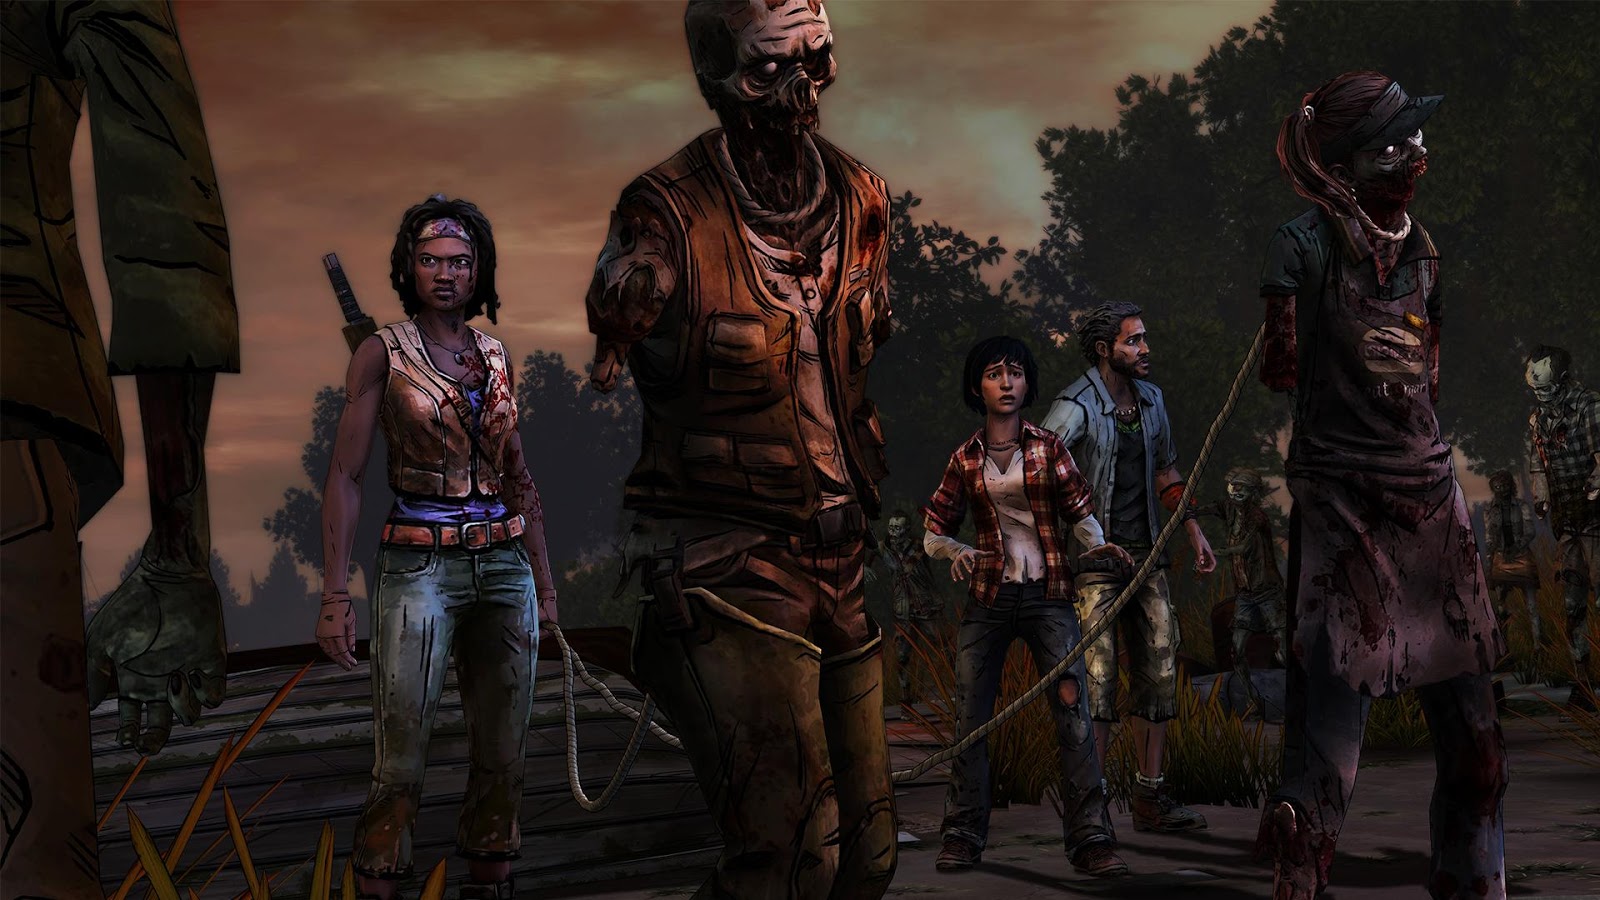 High Resolution Wallpaper | The Walking Dead: Michonne 1600x900 px